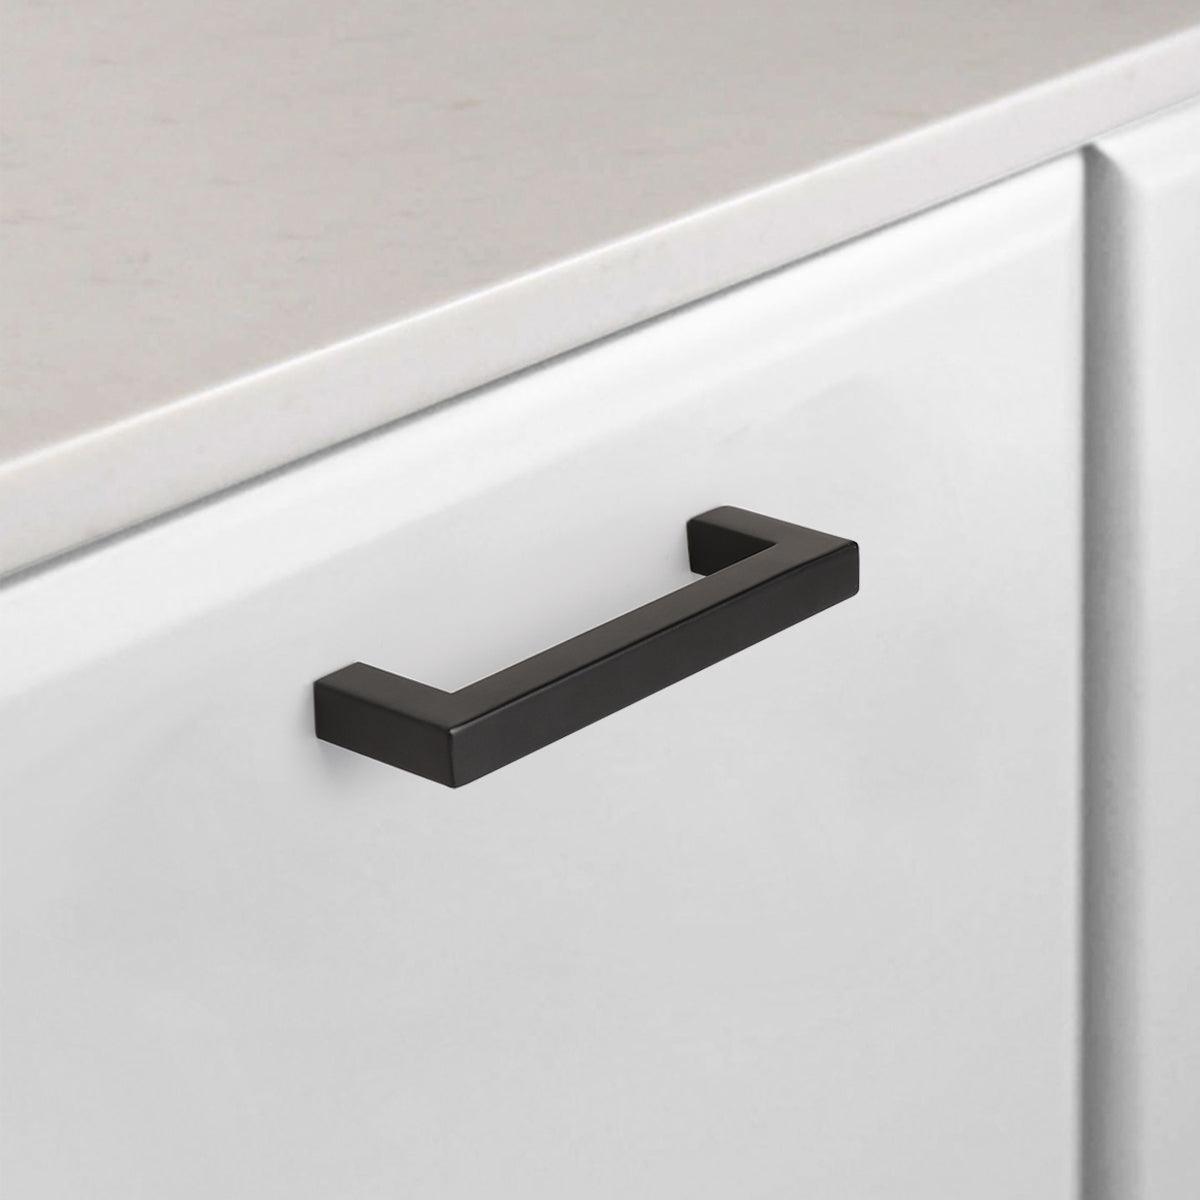 Probrico Black Cabinet Handles Modern Square Bar Drawer Pull 2-12 inch Hole Centers PDDJS12HBK 100 Packs - Probrico